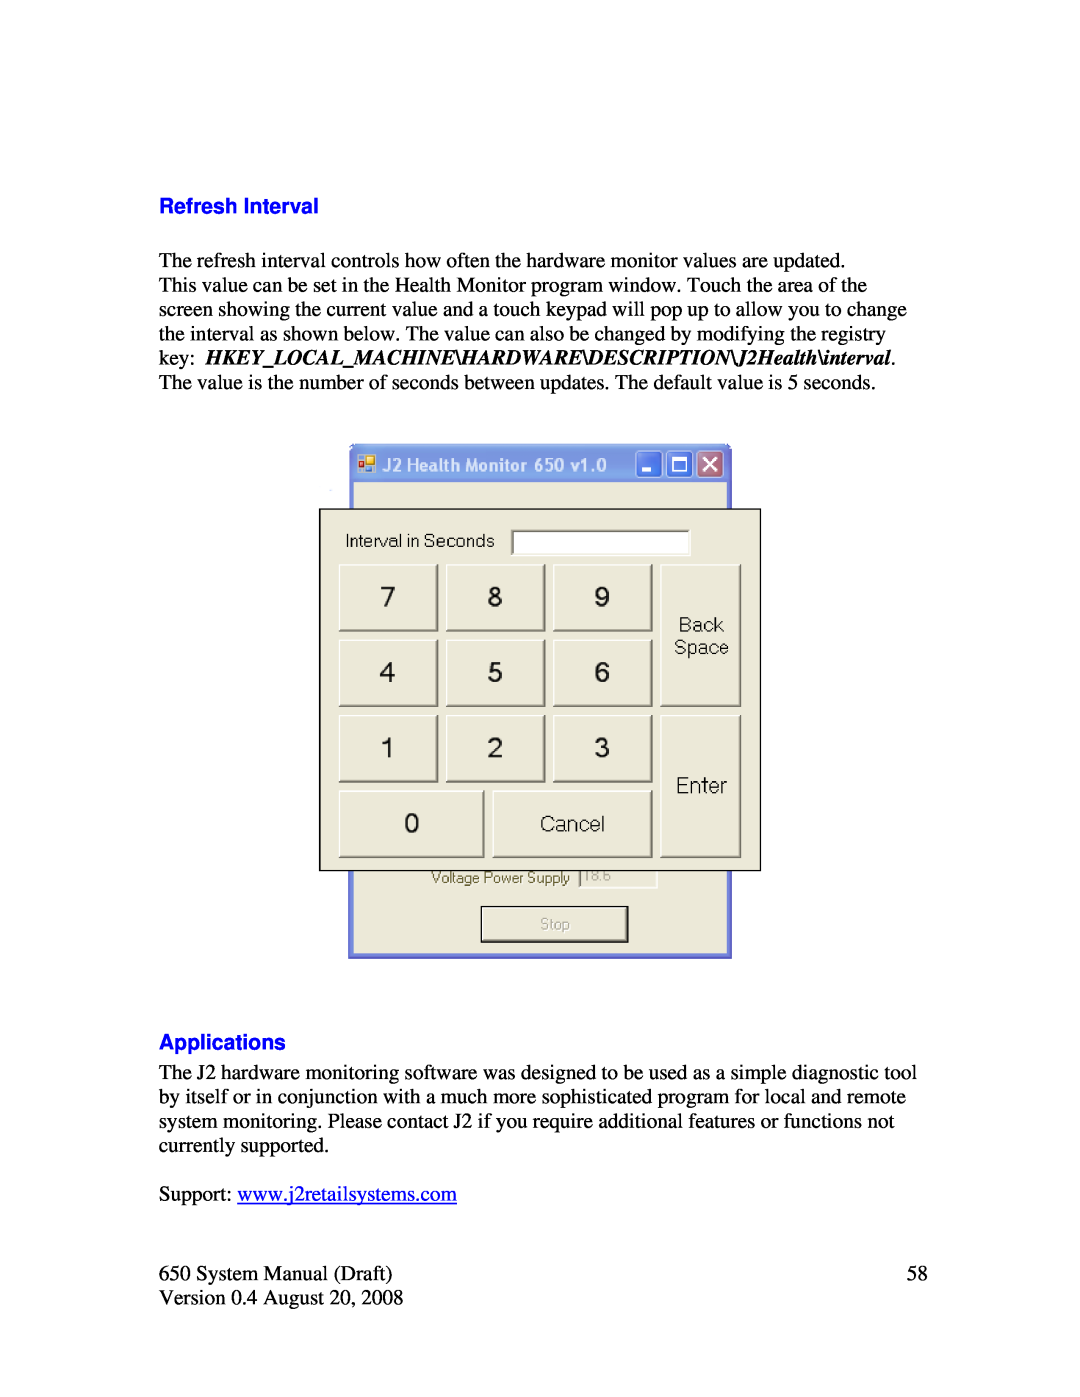 Intel J2 650 system manual Refresh Interval, Applications 